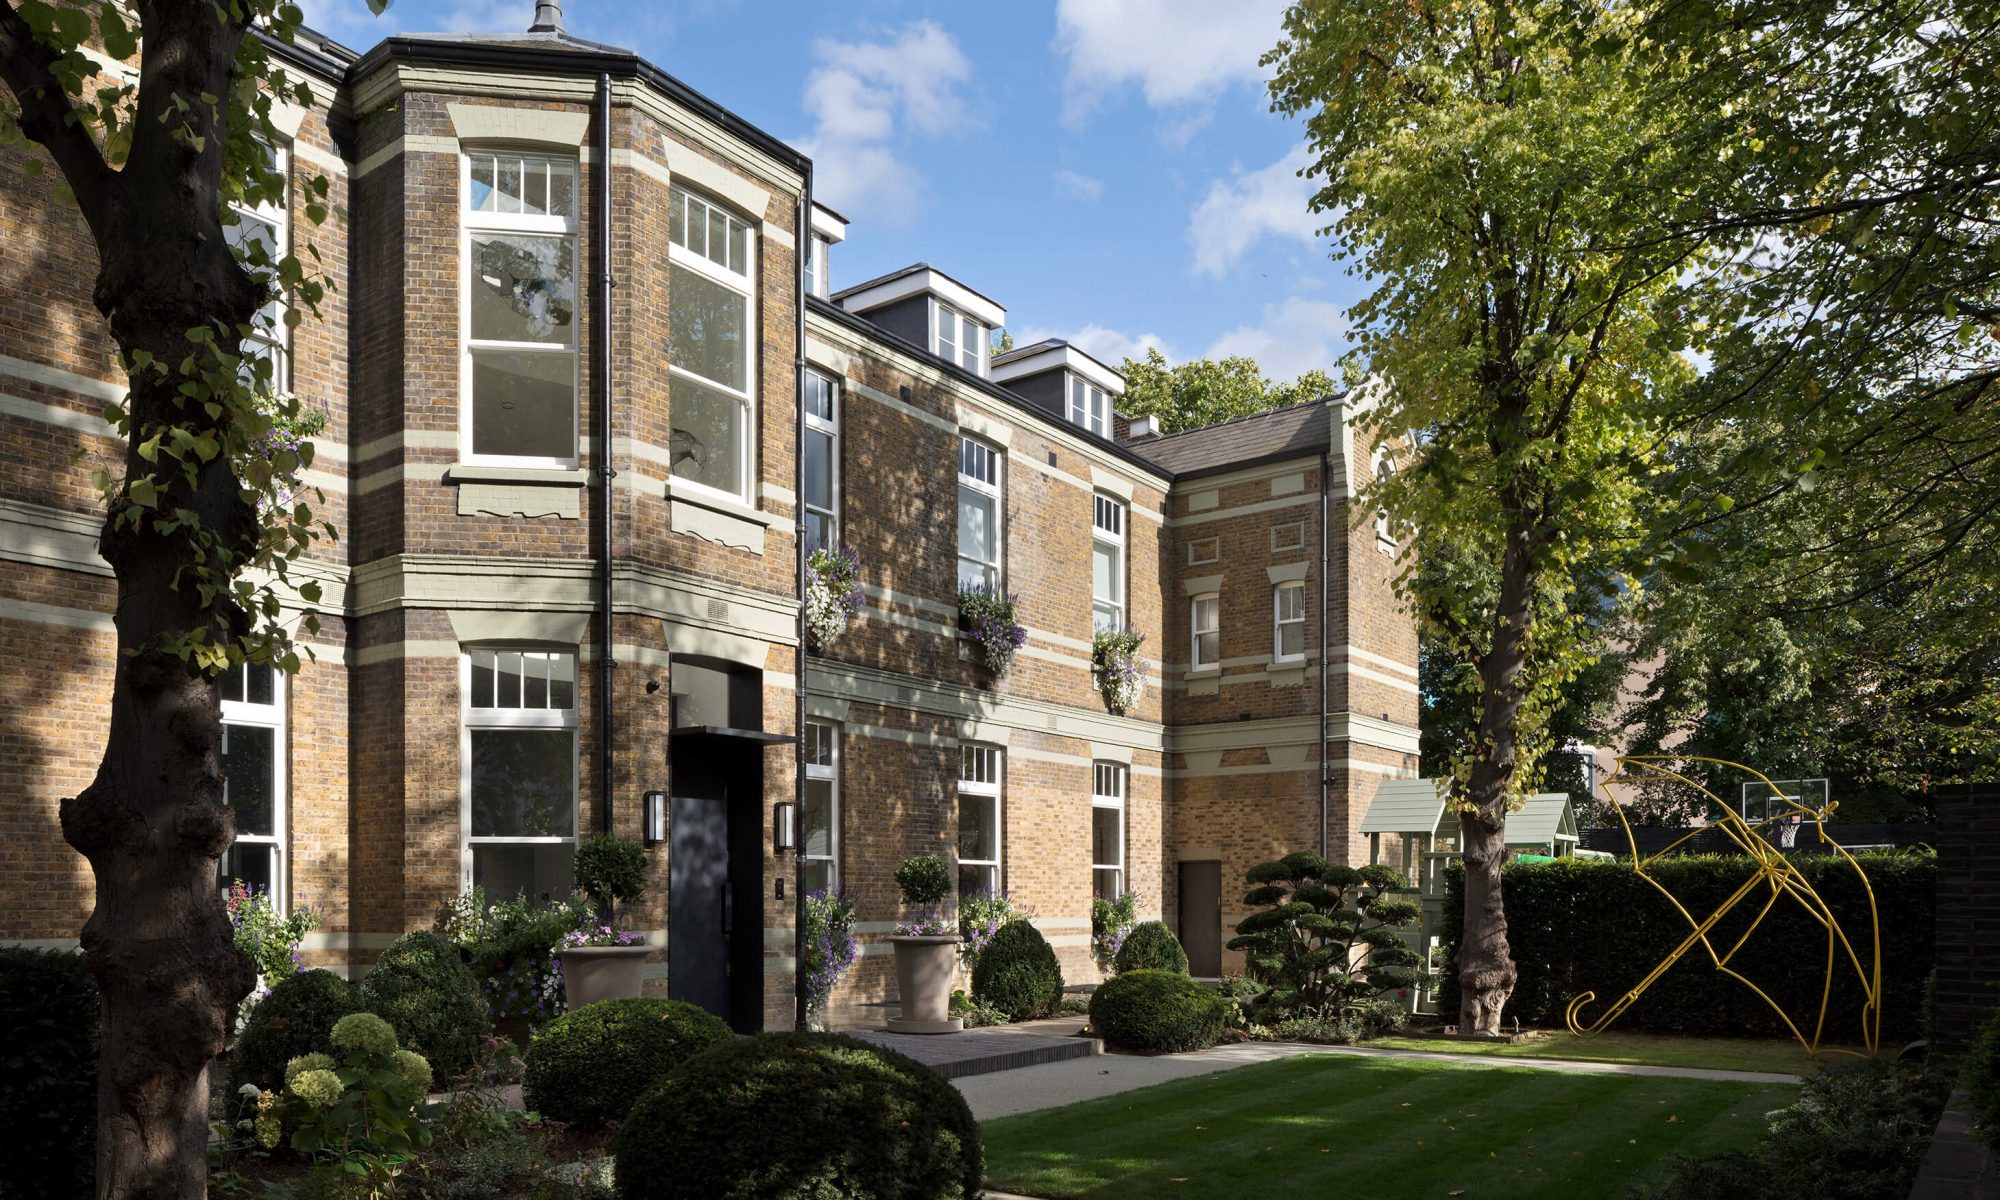 The London Residence - Wilkinson Beven